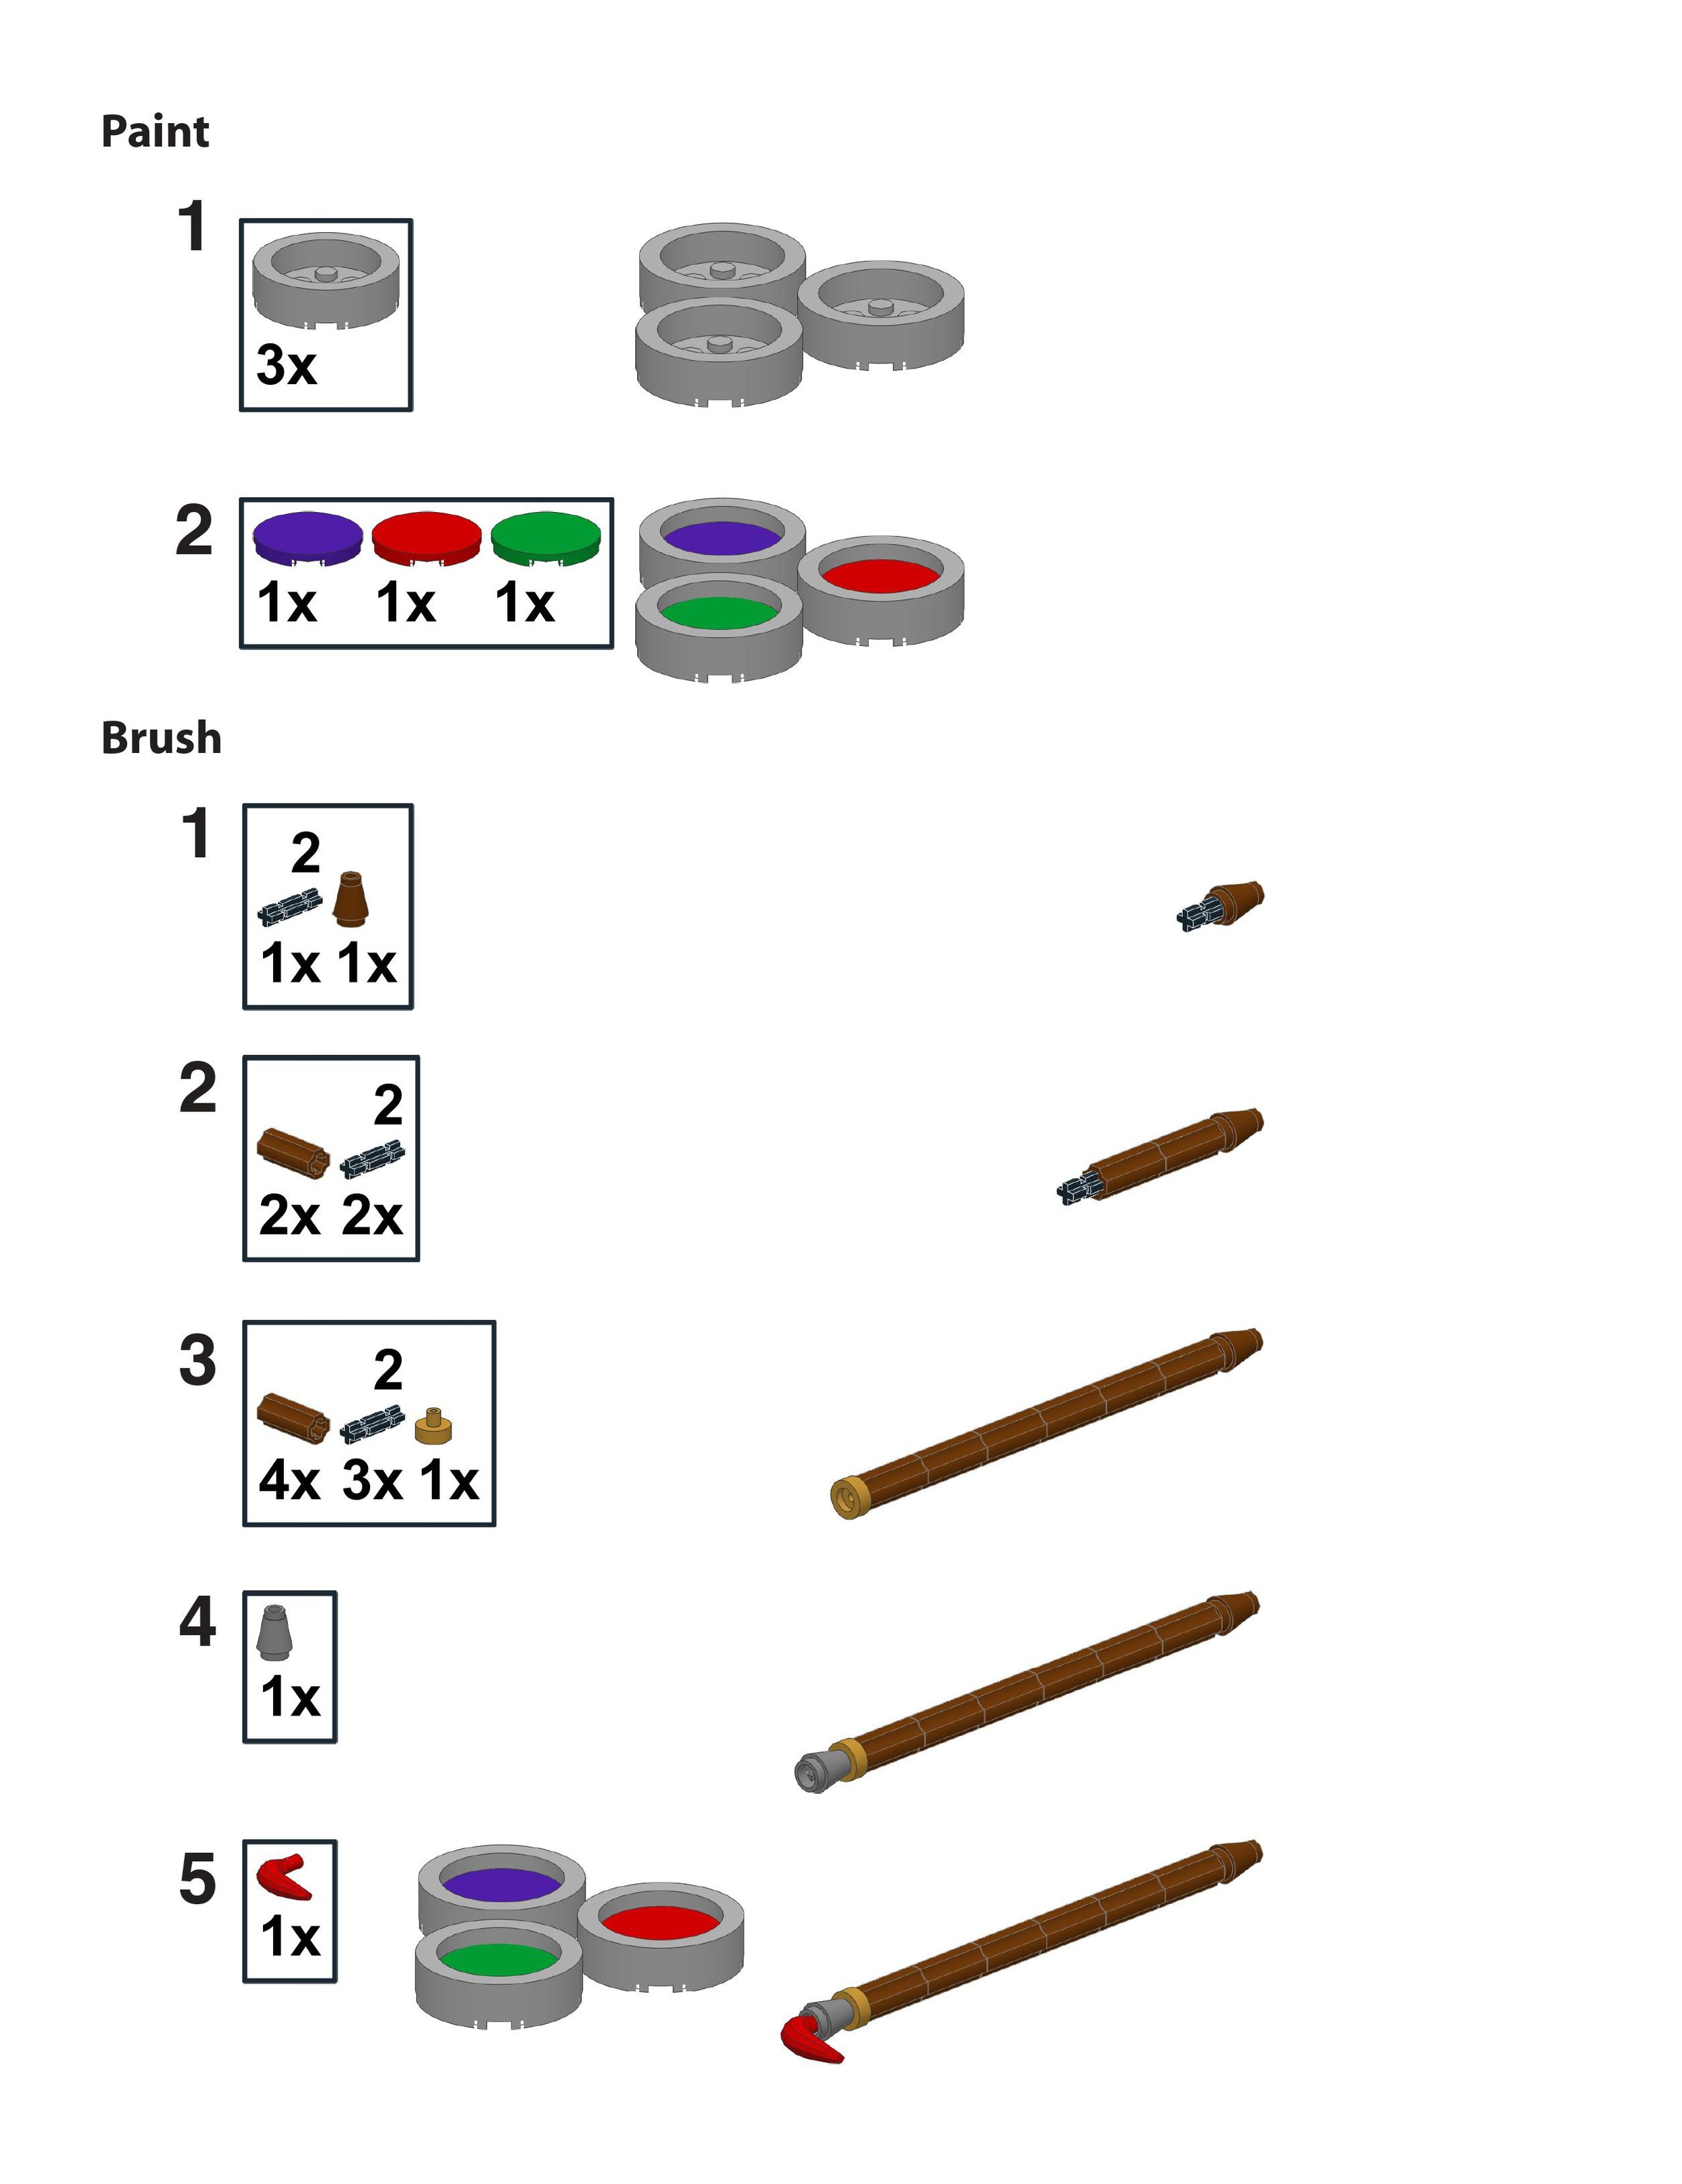 LEGO Art Supplies Instructions - Paint and Brush - BrickNerd.jpg